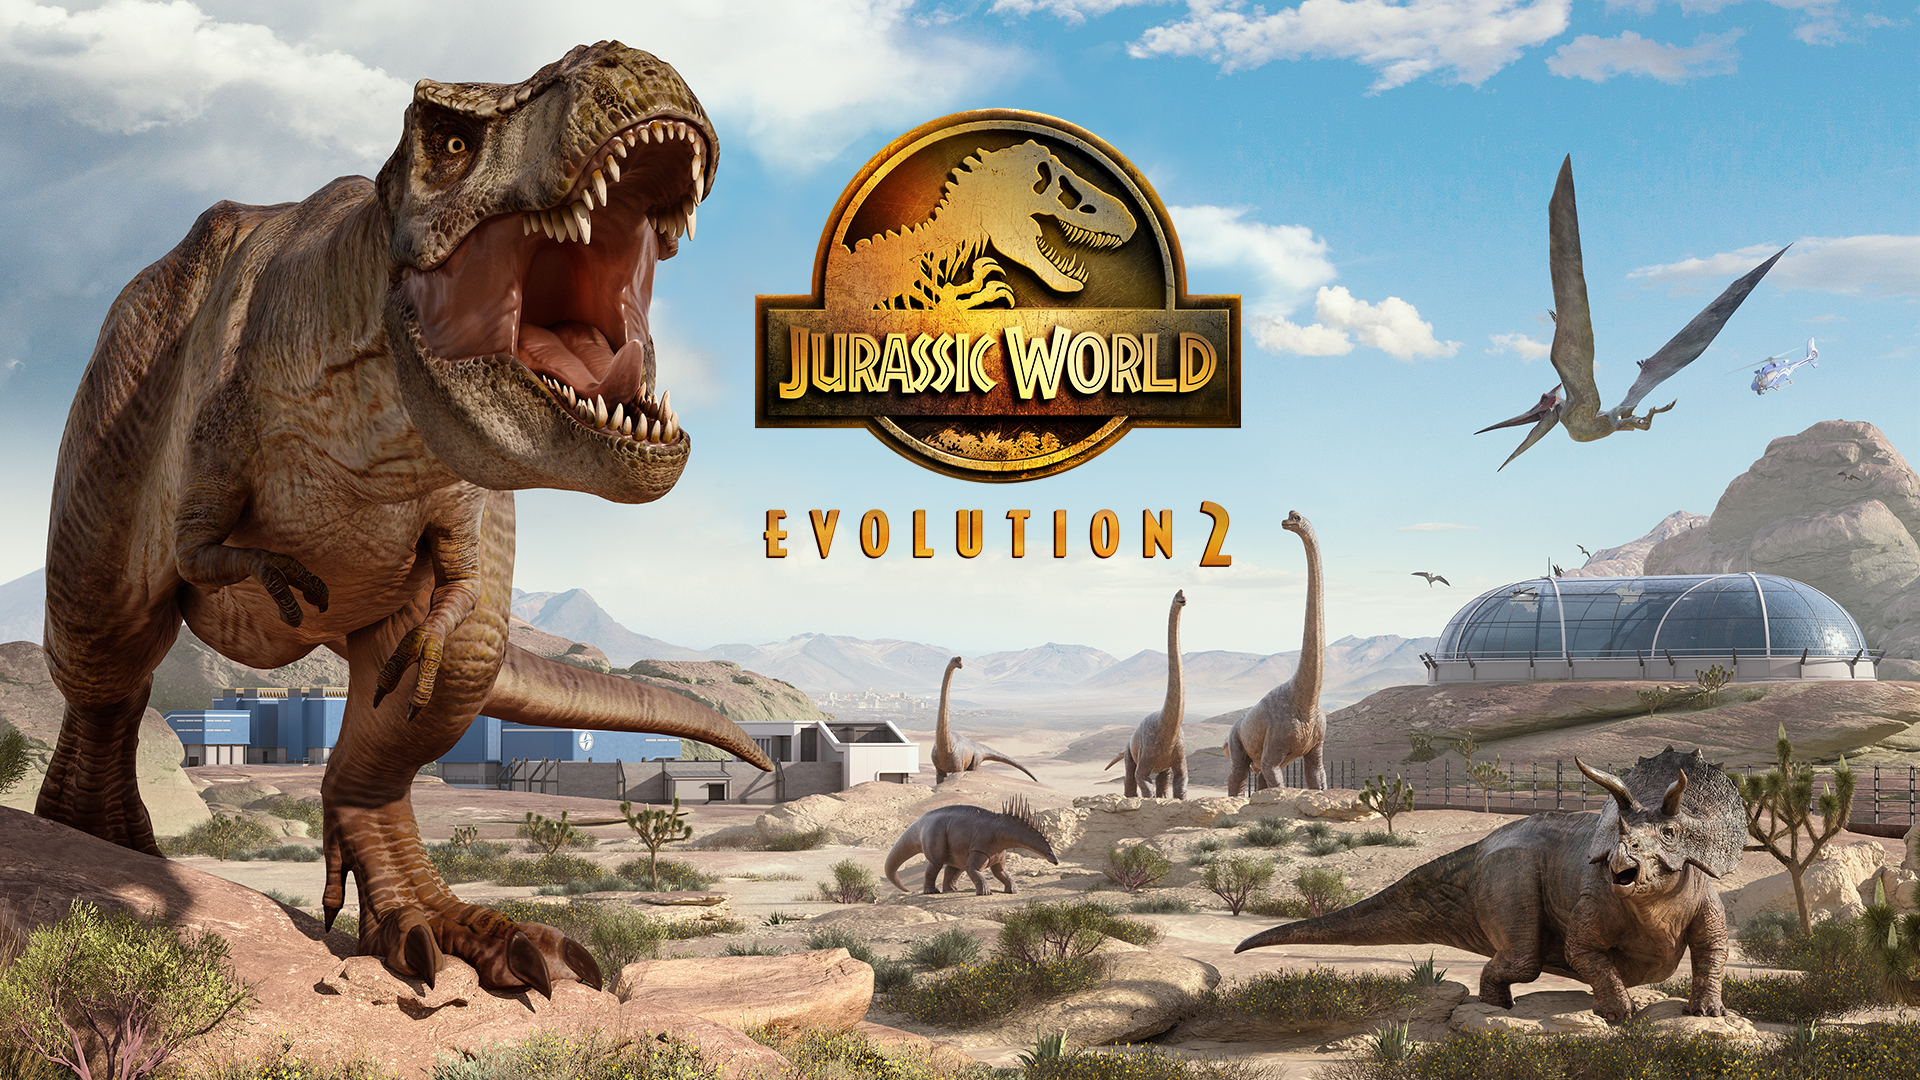 Jurassic World Evolution 2 - Un mundo evolucionado